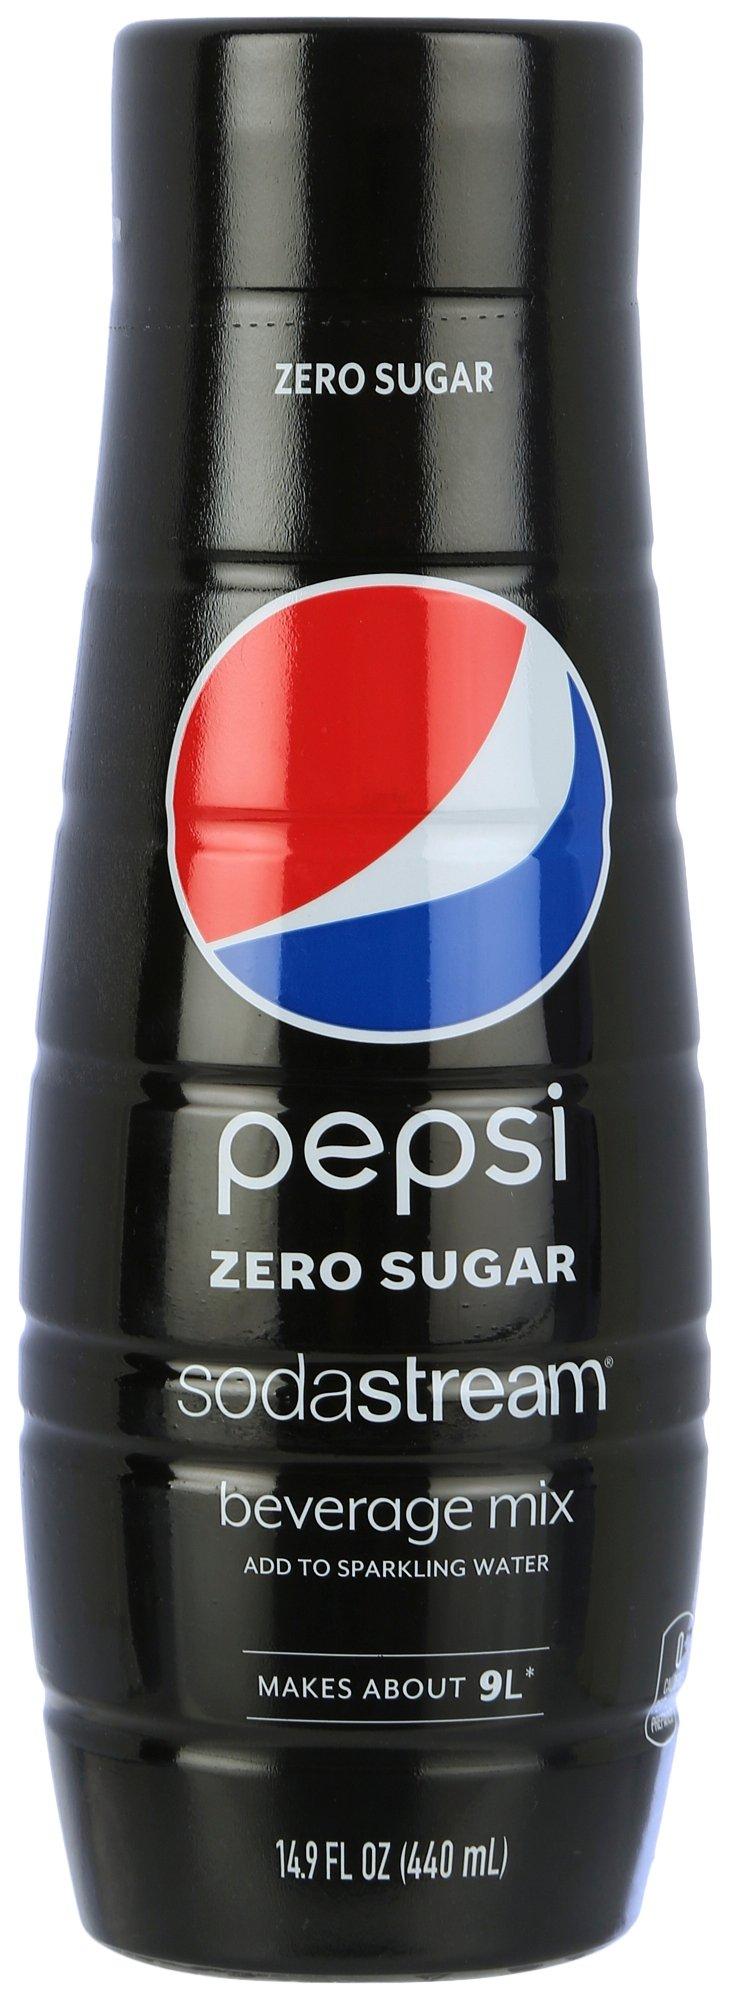 https://images.beallsflorida.com/i/beallsflorida/654-7214-2567-00-yyy/*Pepsi-Zero-Sugar-Mix*?$product$&fmt=auto&qlt=default